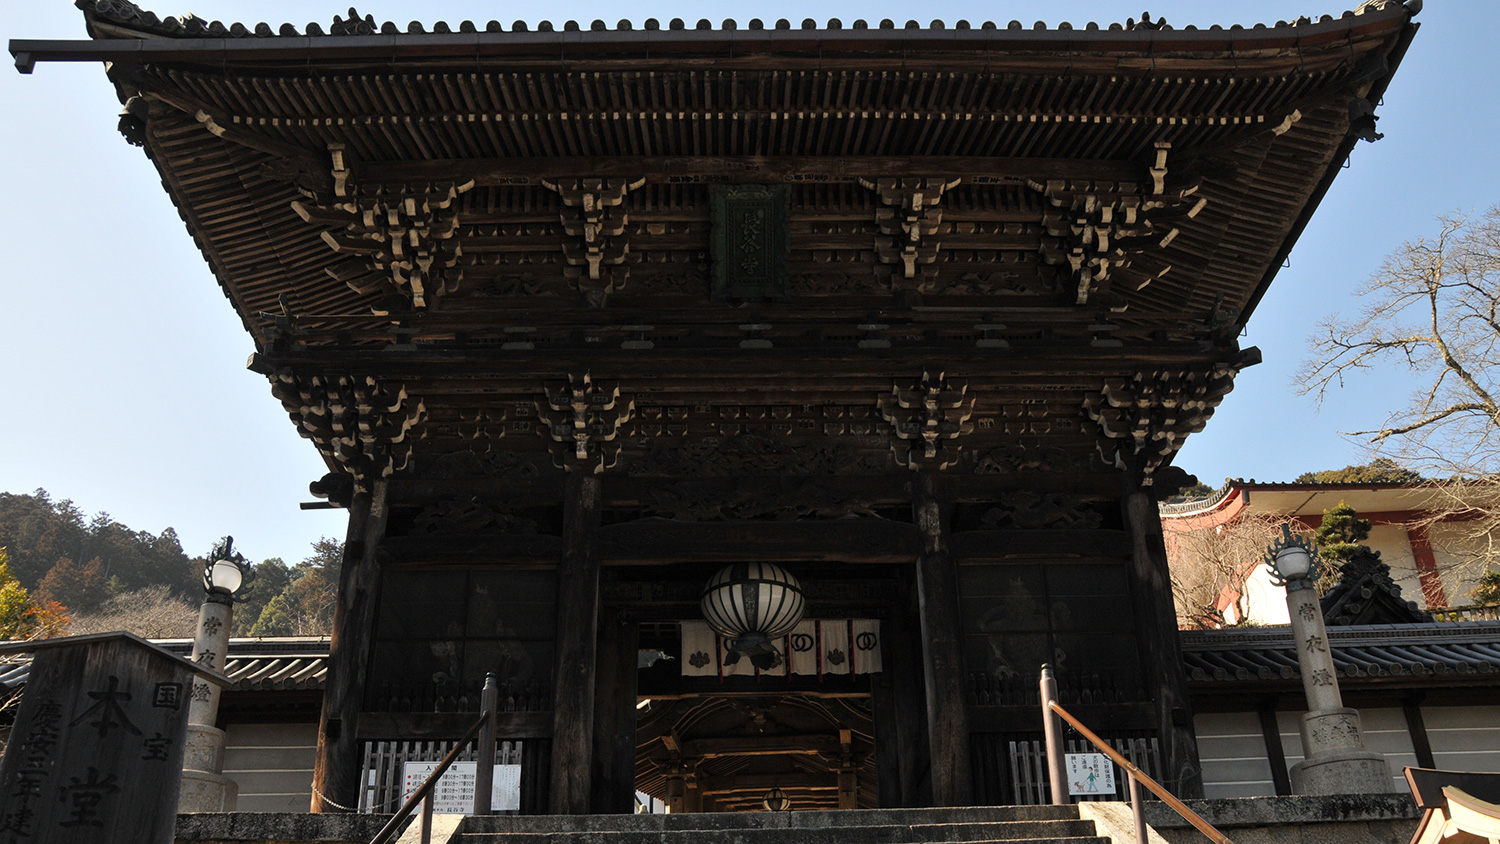 Niō-mon, or Niō Gate